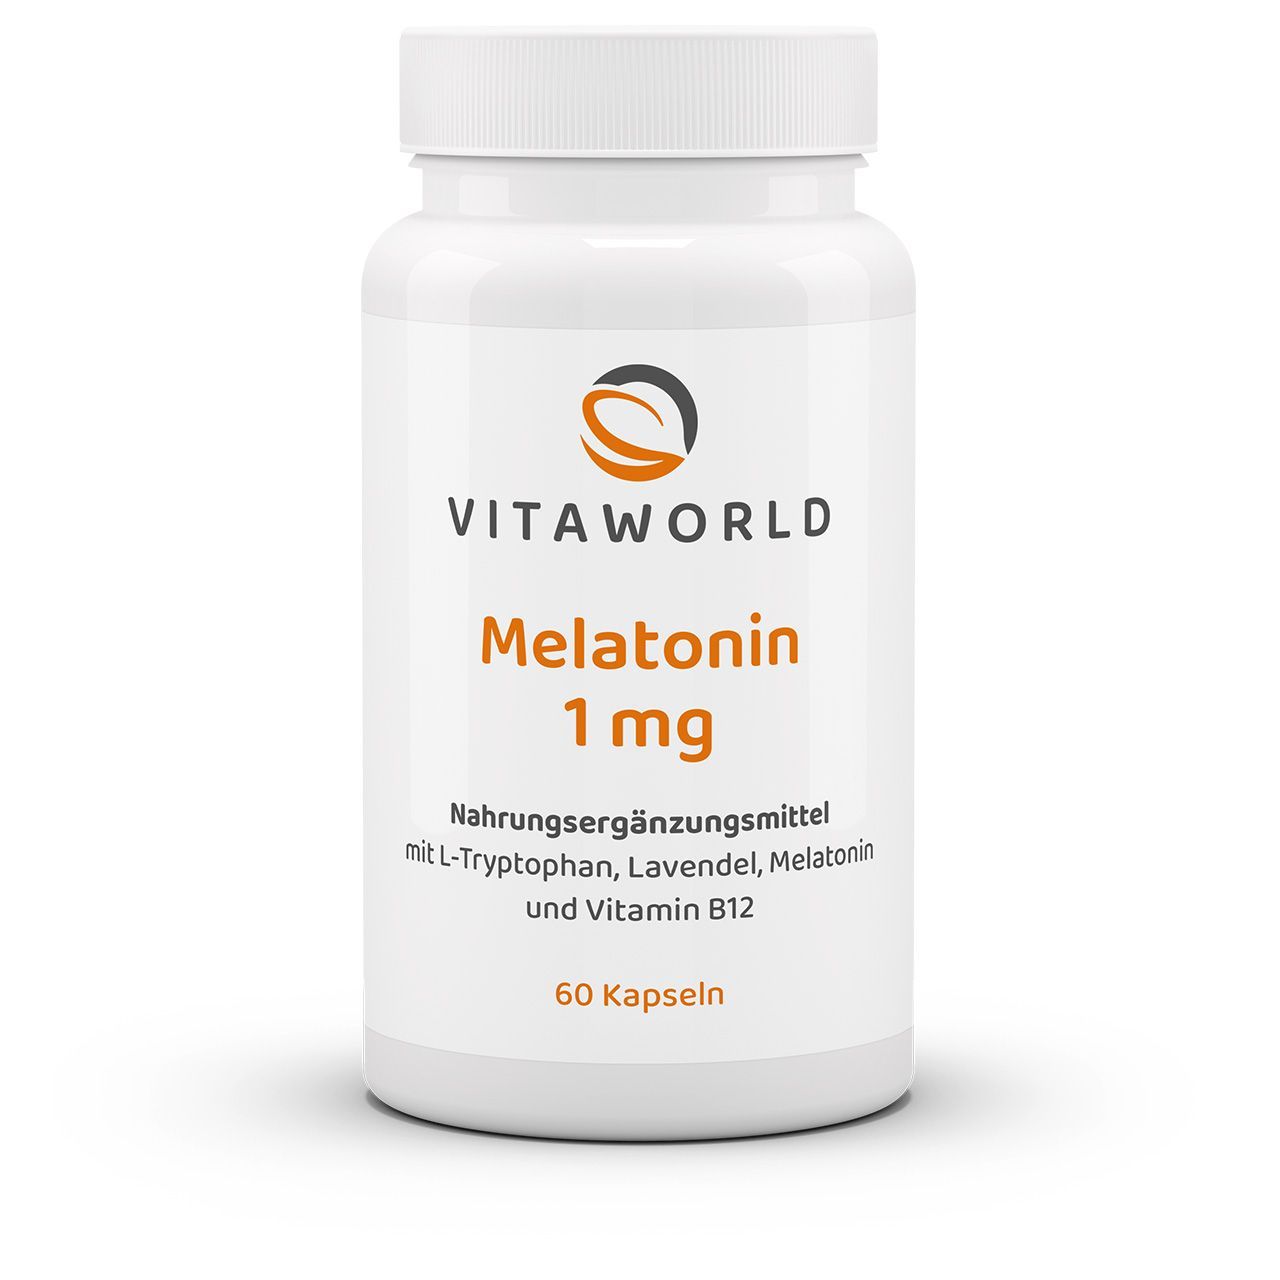 Vitaworld Melatonin 1 mg | 60 Kapseln | mit L-Tryptophan & Lavendel